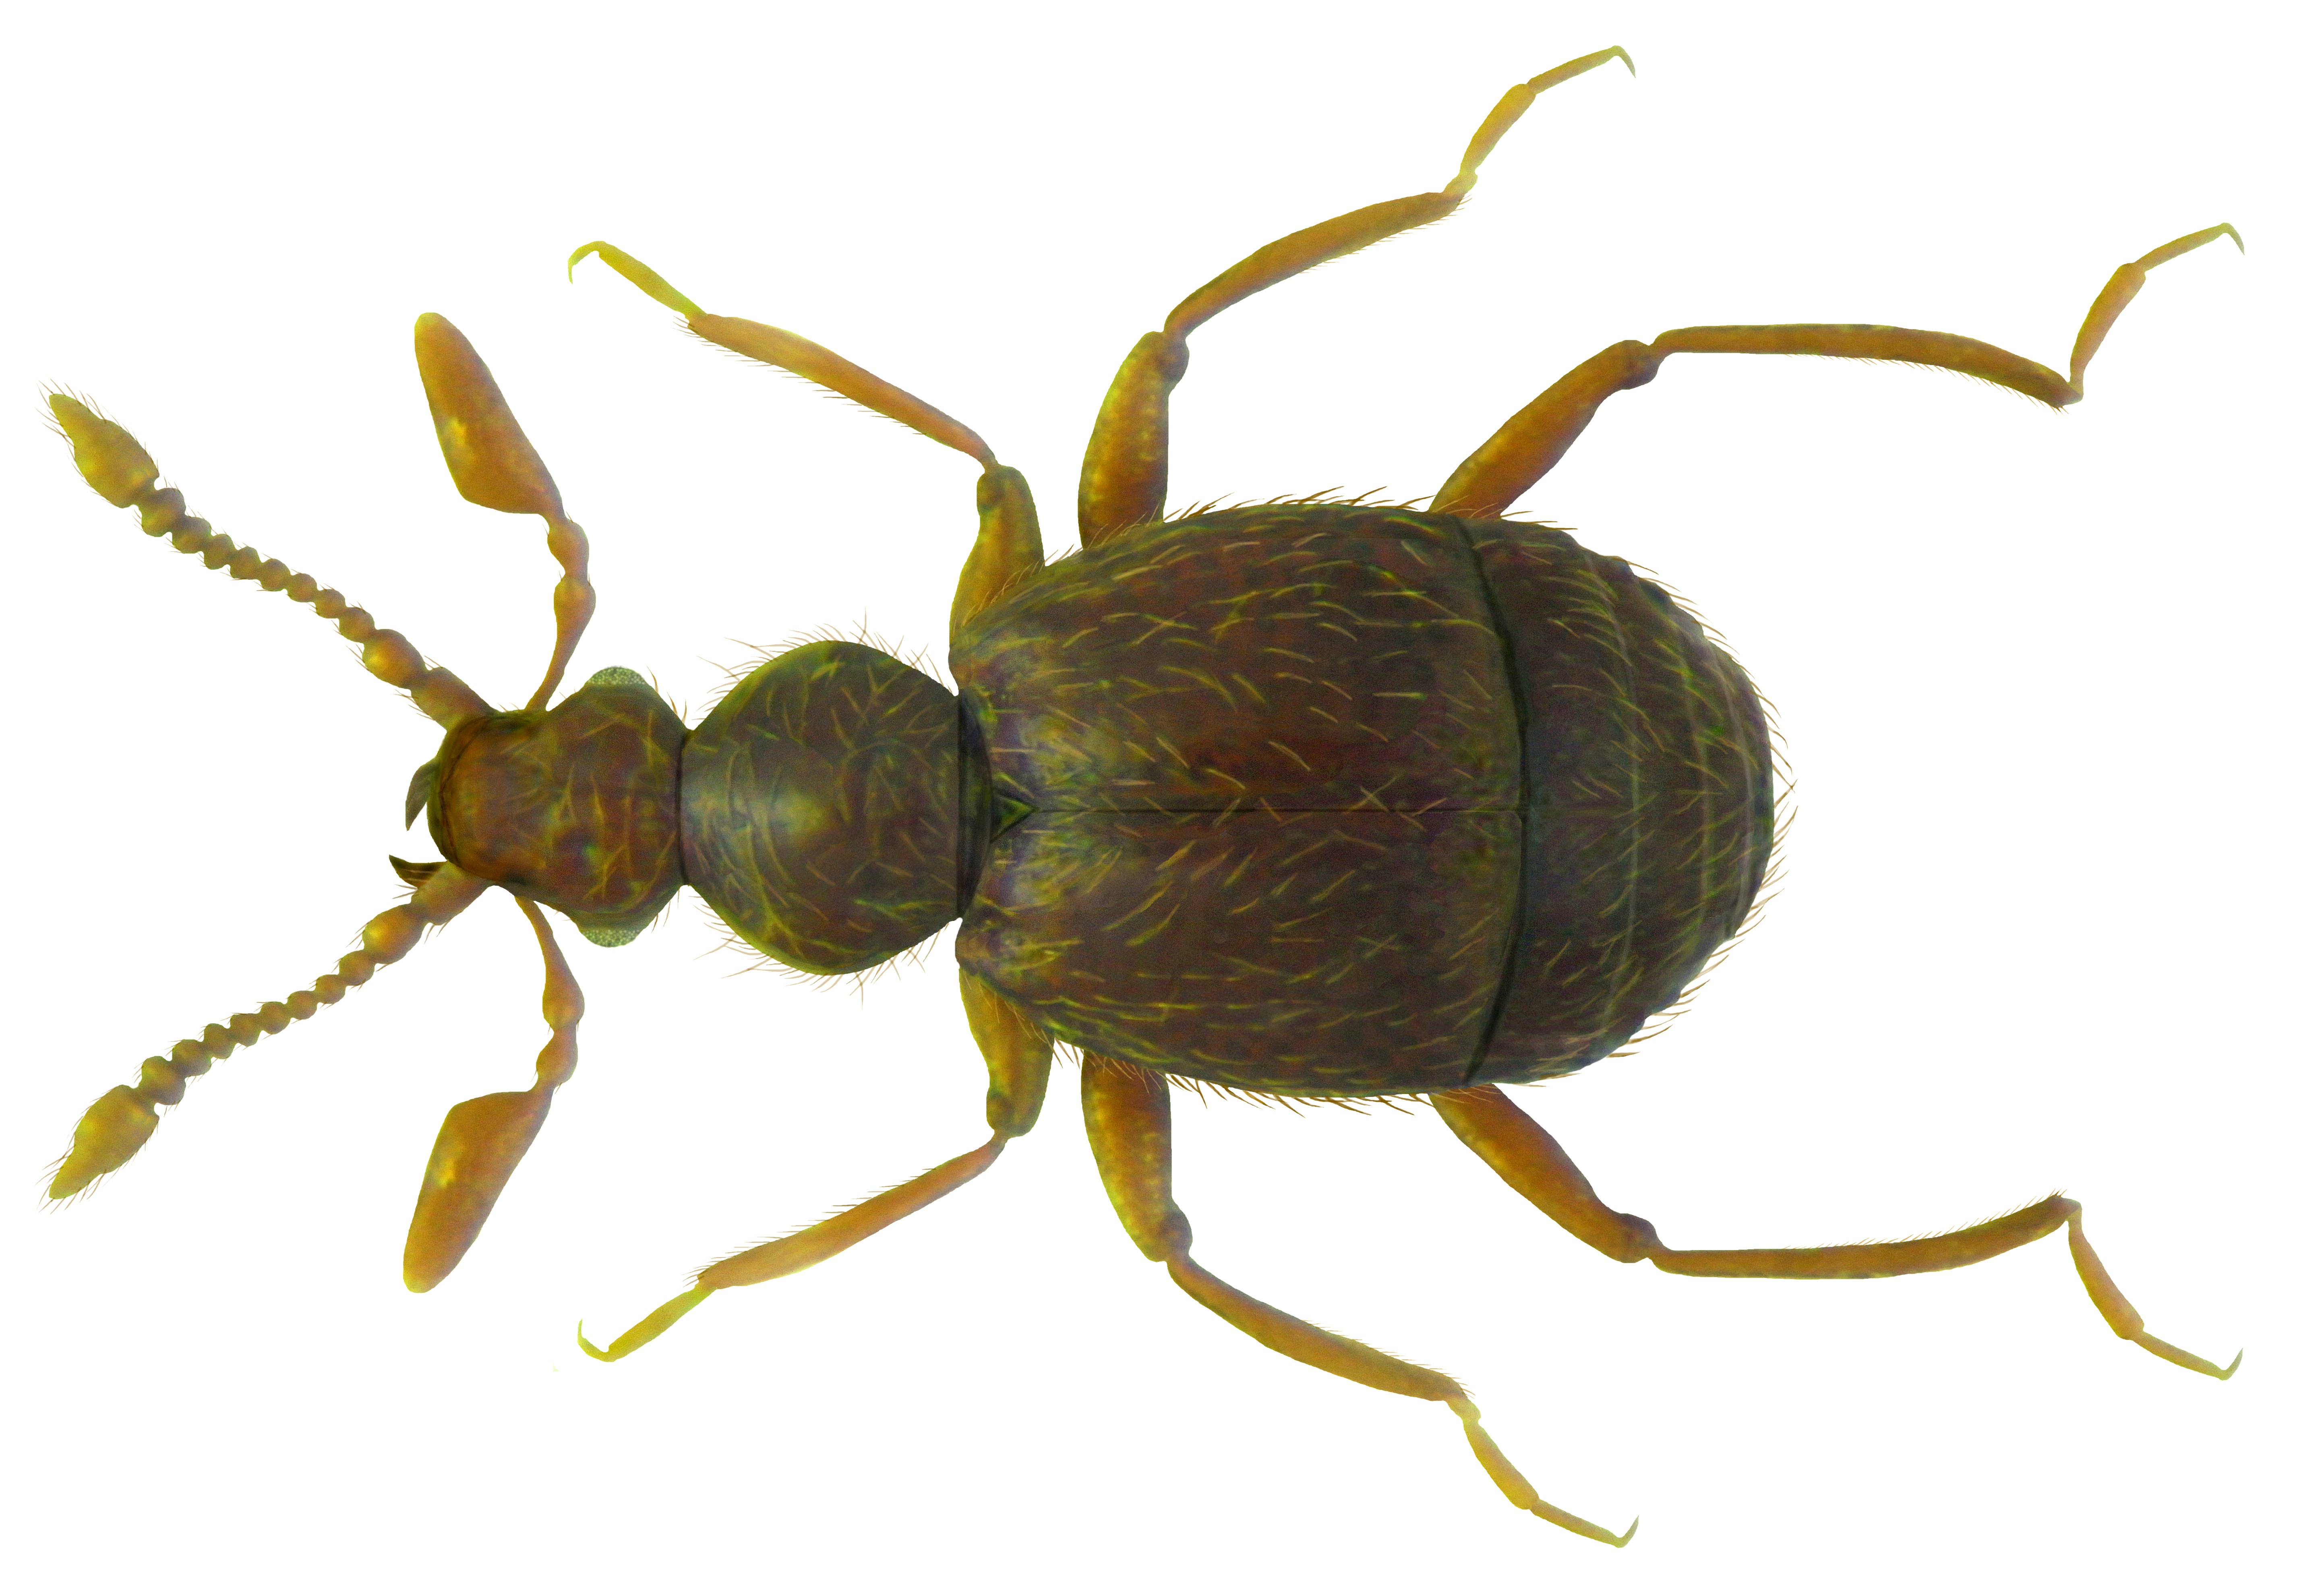 Bryaxis curtisi (Leach, 1817) female (5519849914).jpg. 